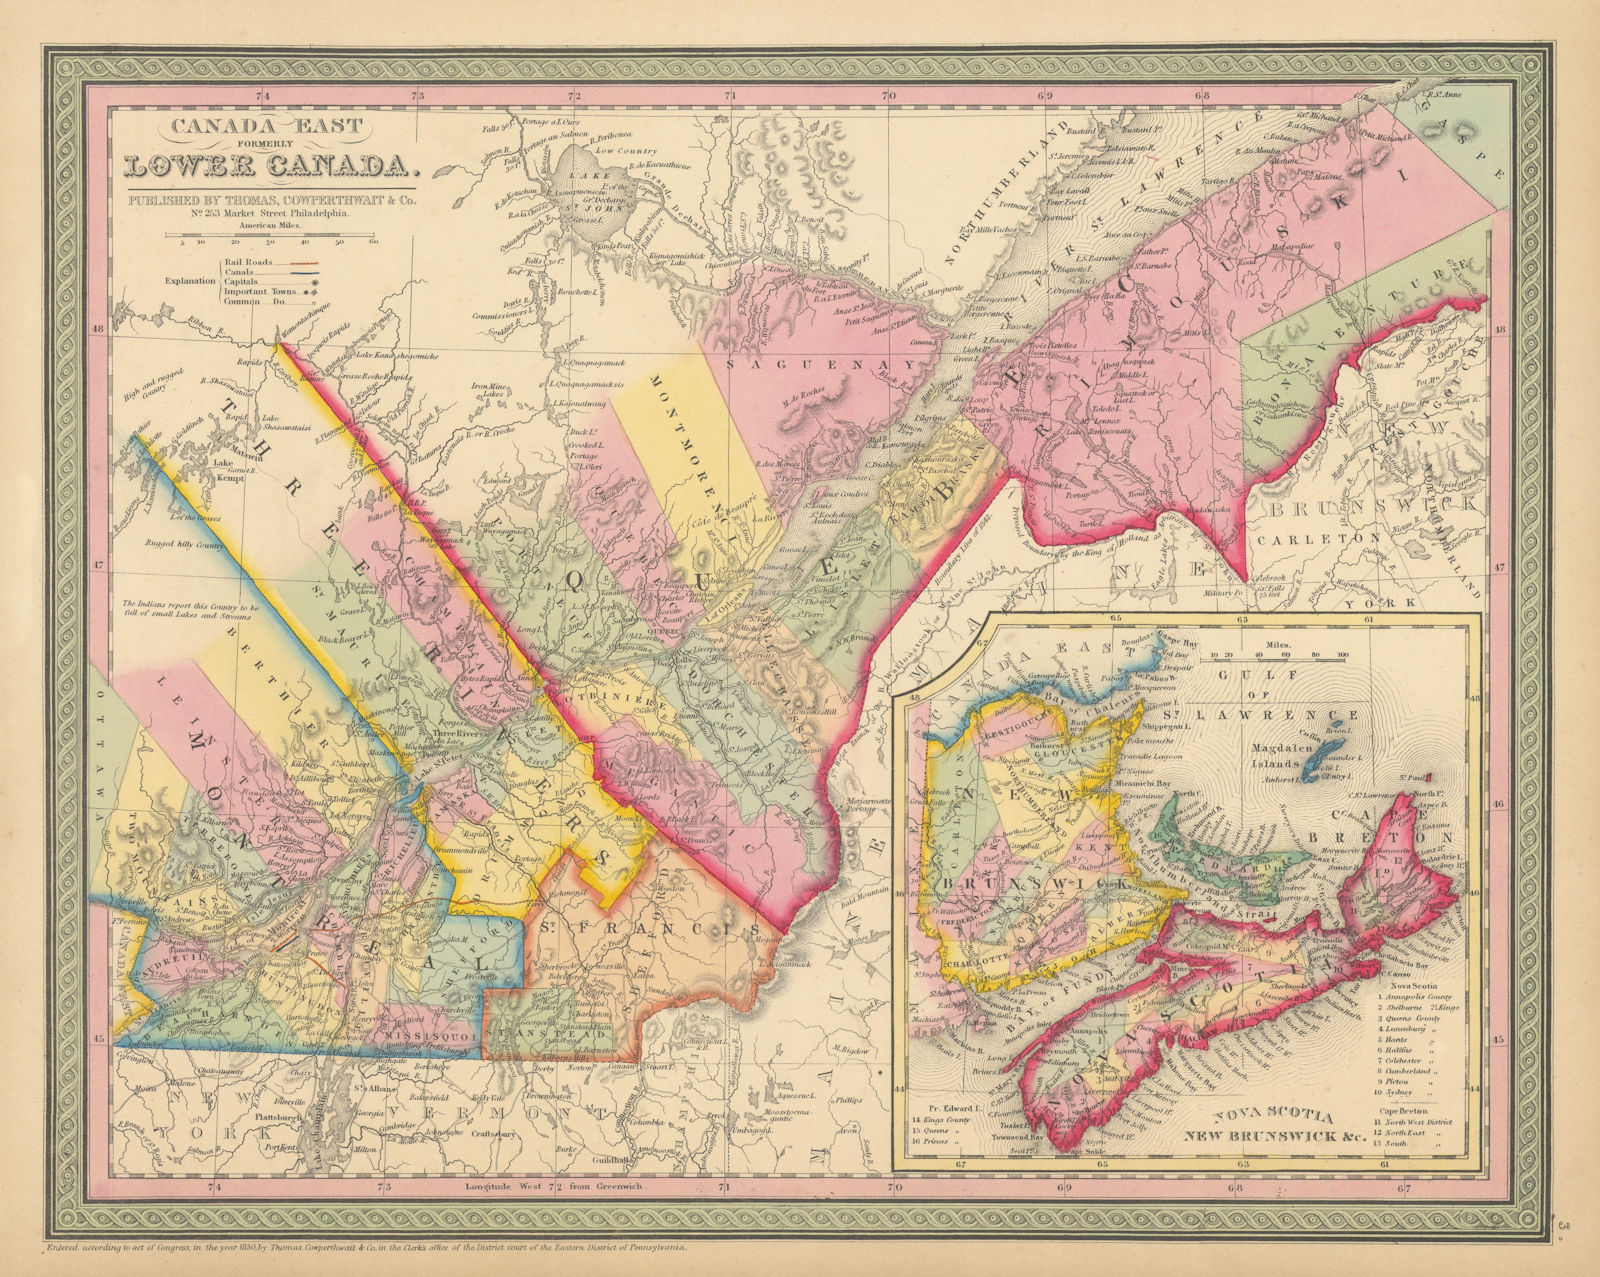 Associate Product Canada East formerly Lower Canada. Nova Scotia & NB. COWPERTHWAIT 1852 old map